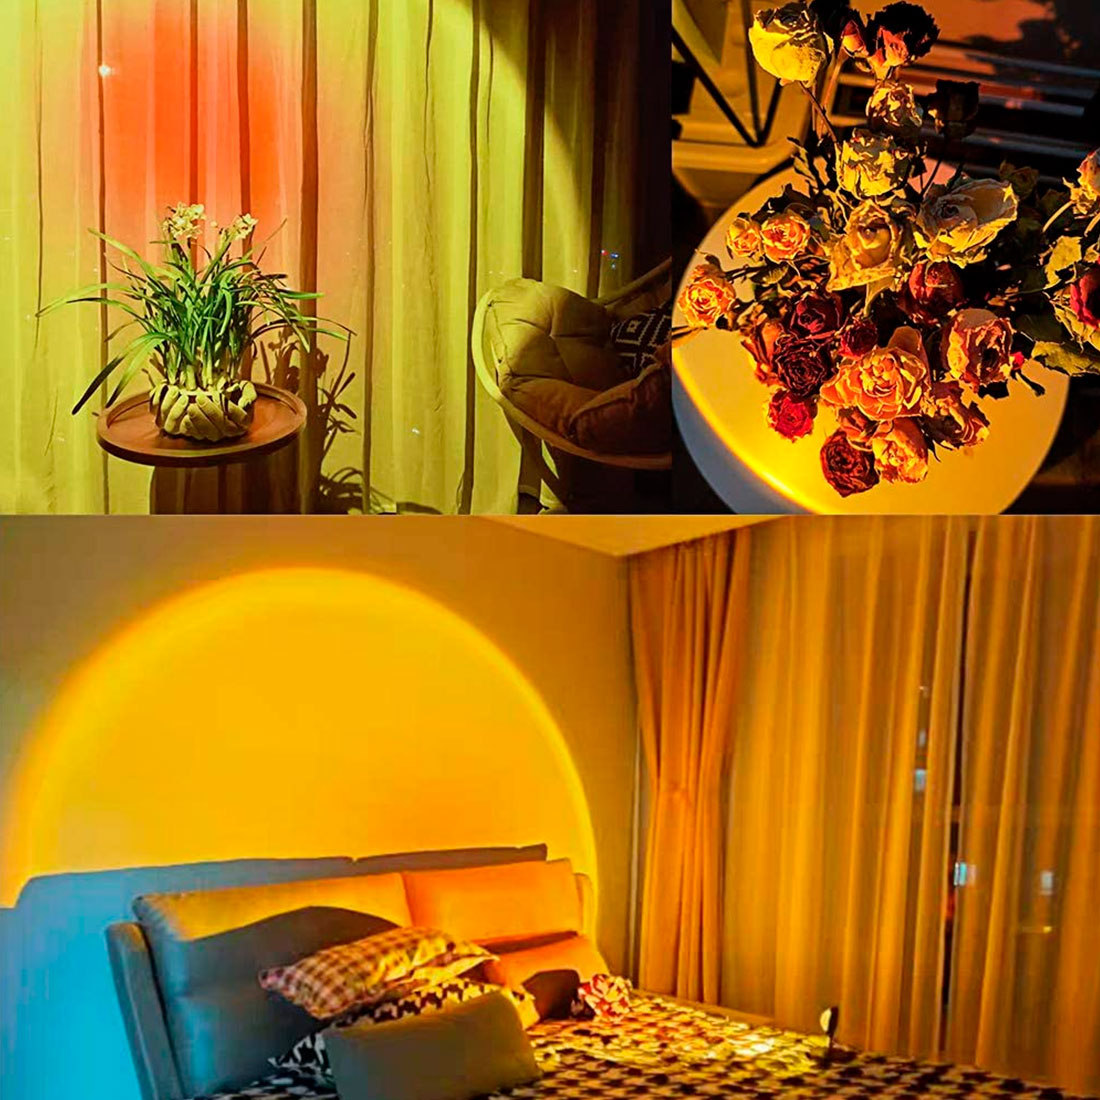 USB-Sunset-Projection-Lamp-Aesthetic-Table-Lamp-Anti-glare-LED-Night-Light-Romantic-Visual-Experienc-1822954-12